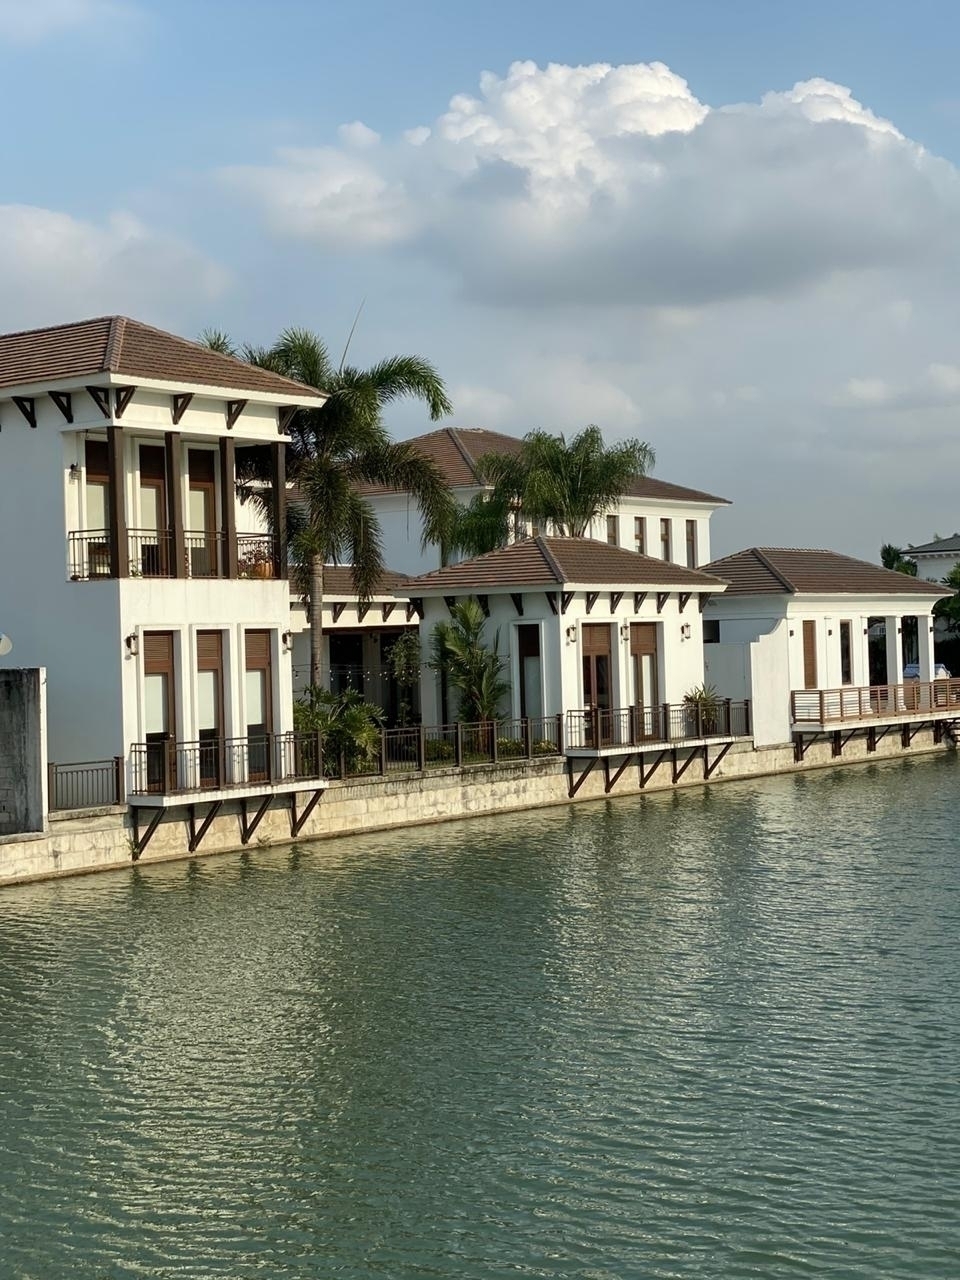 Doomos. Hermosa Villa Al Lago de Venta en Plaza Lagos, Samborondon